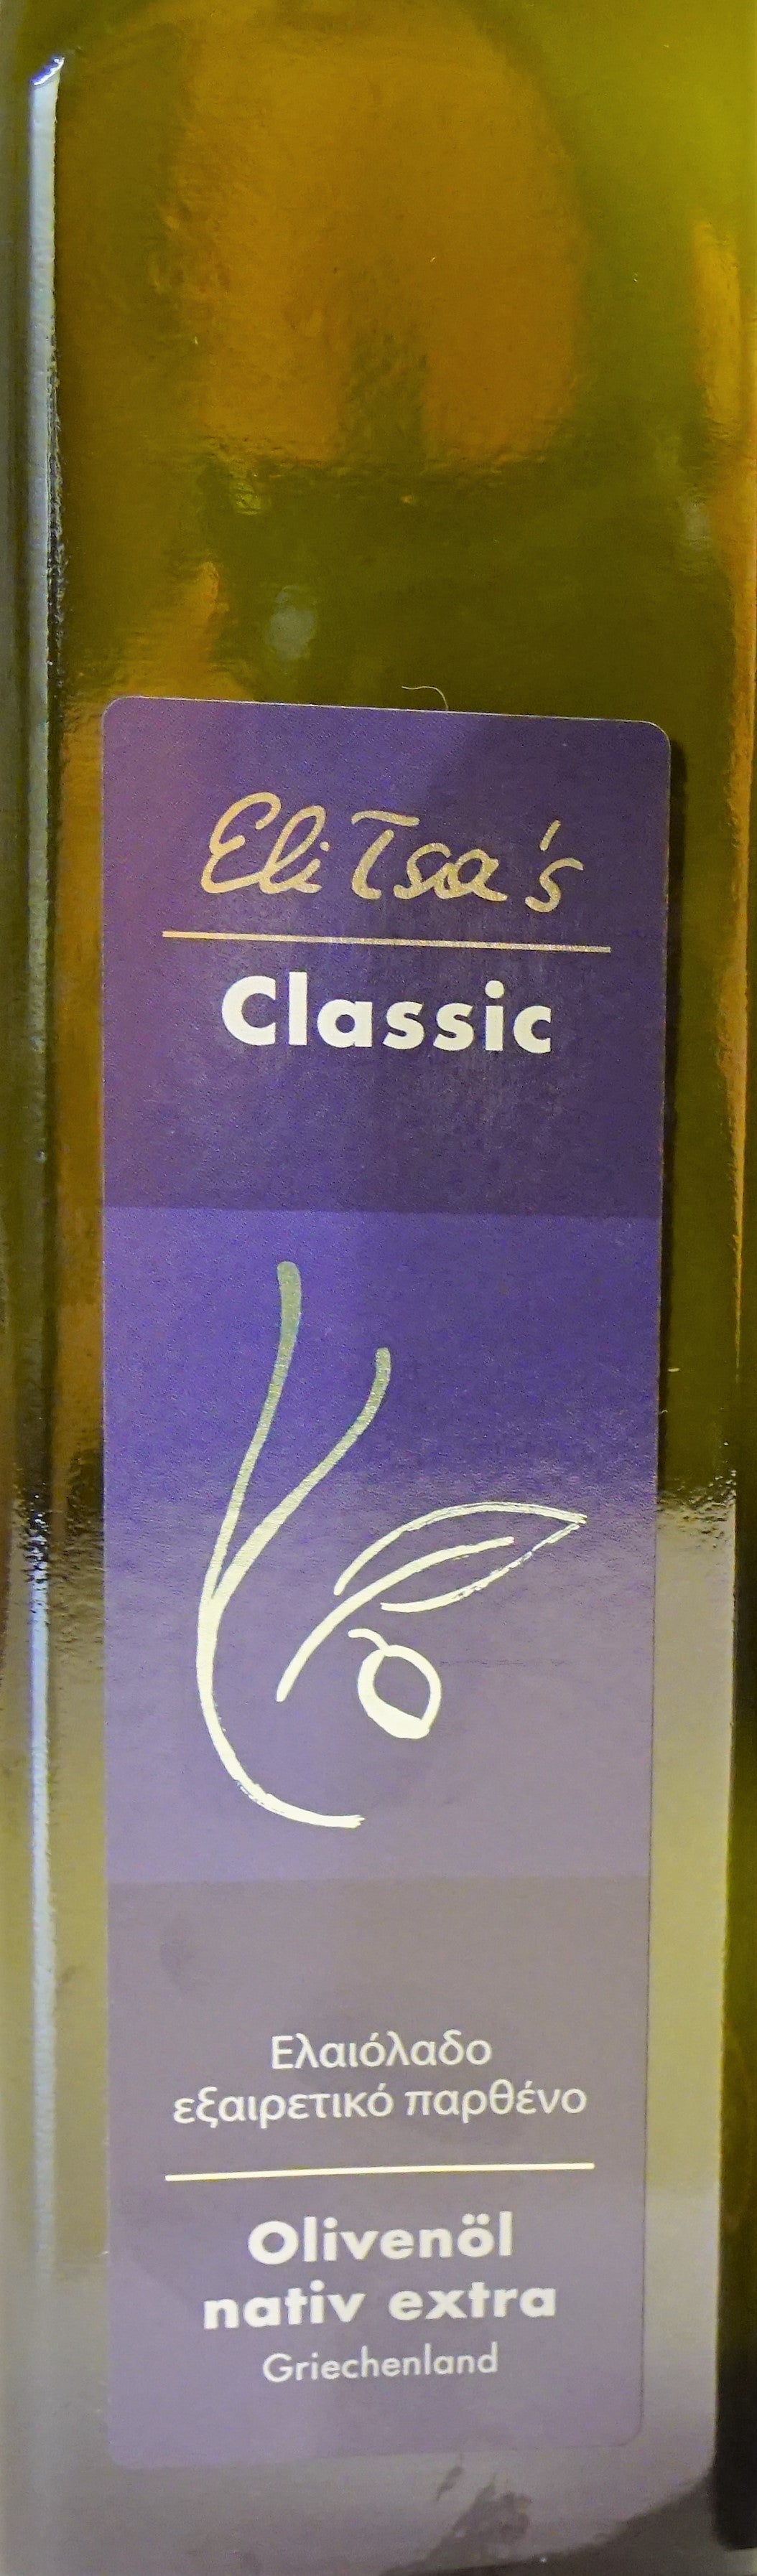 Natives Olivenöl Extra: EliTsa's Classic 500 ml / 750ml / 1 Liter Flasche